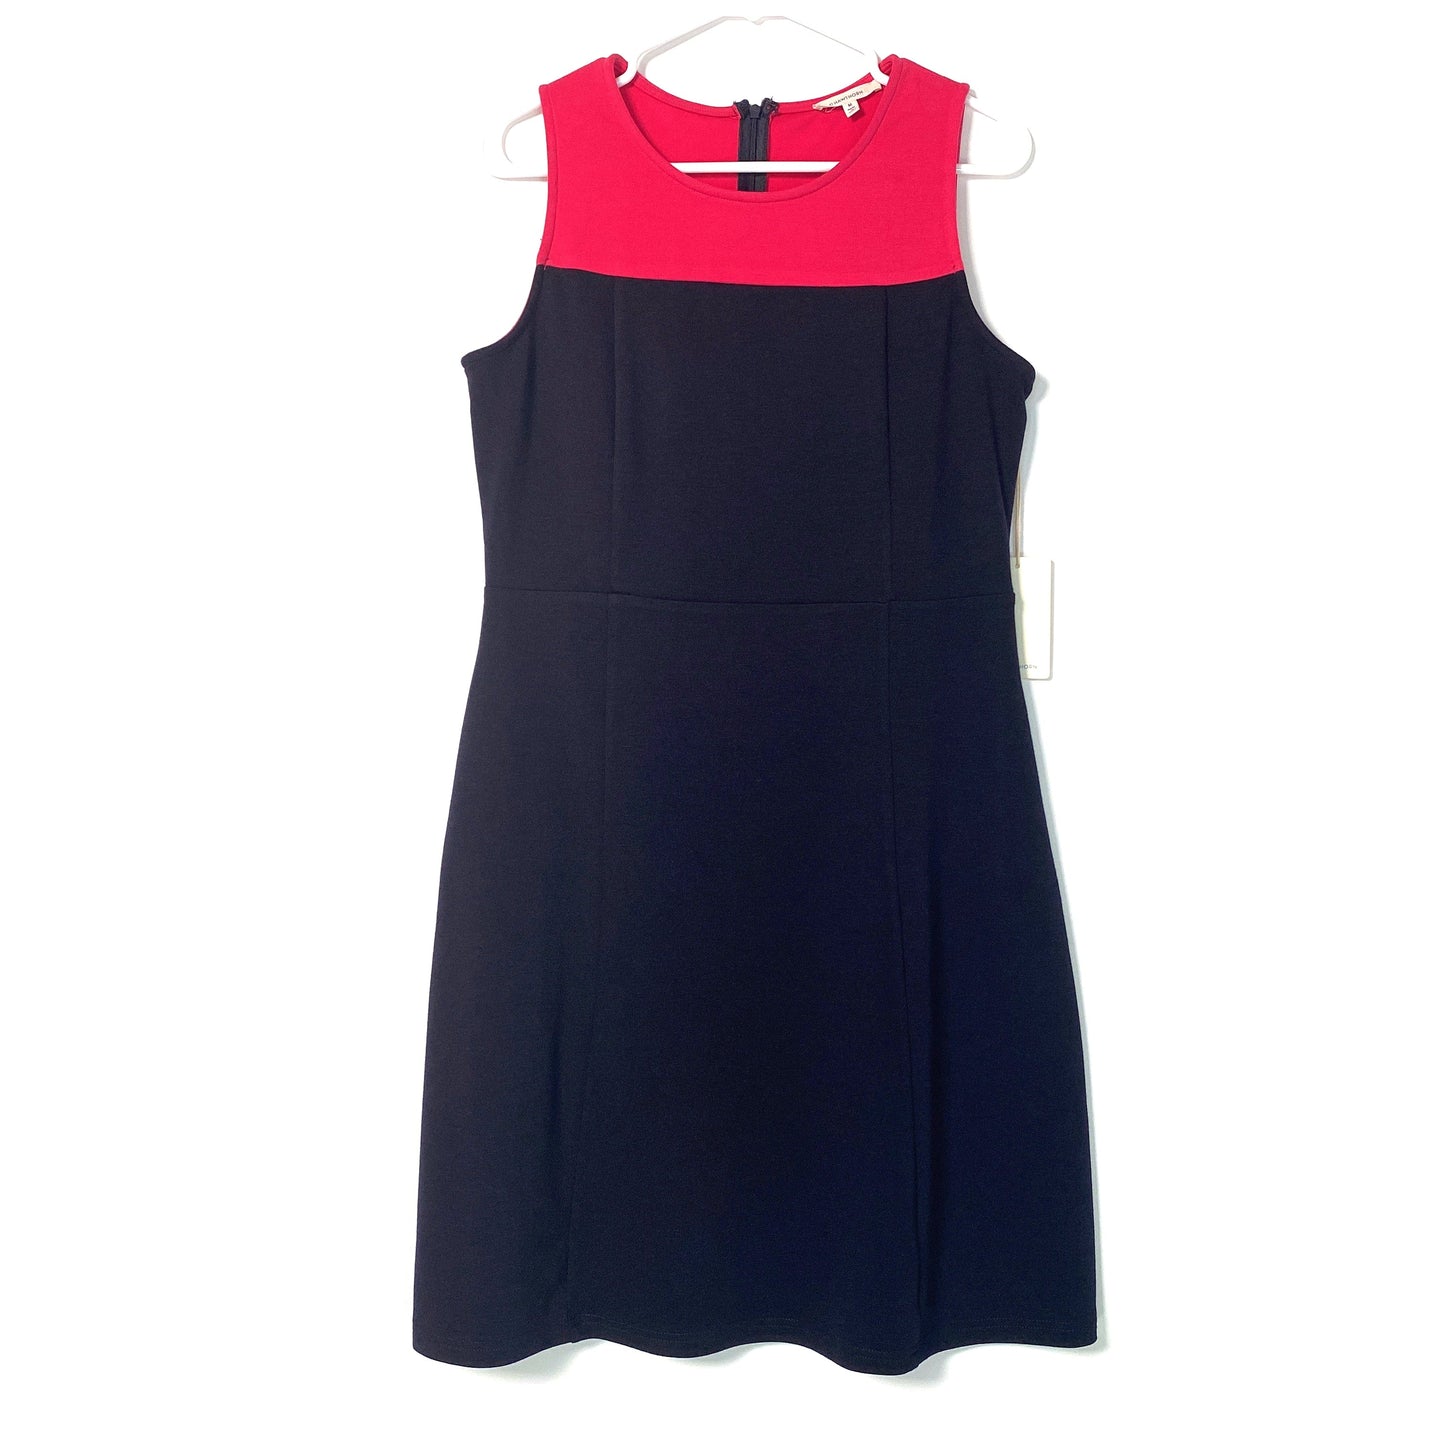 41 Hawthorn Womens Dress Size M Pink Navy Blue Fit & Flare Sleeveless